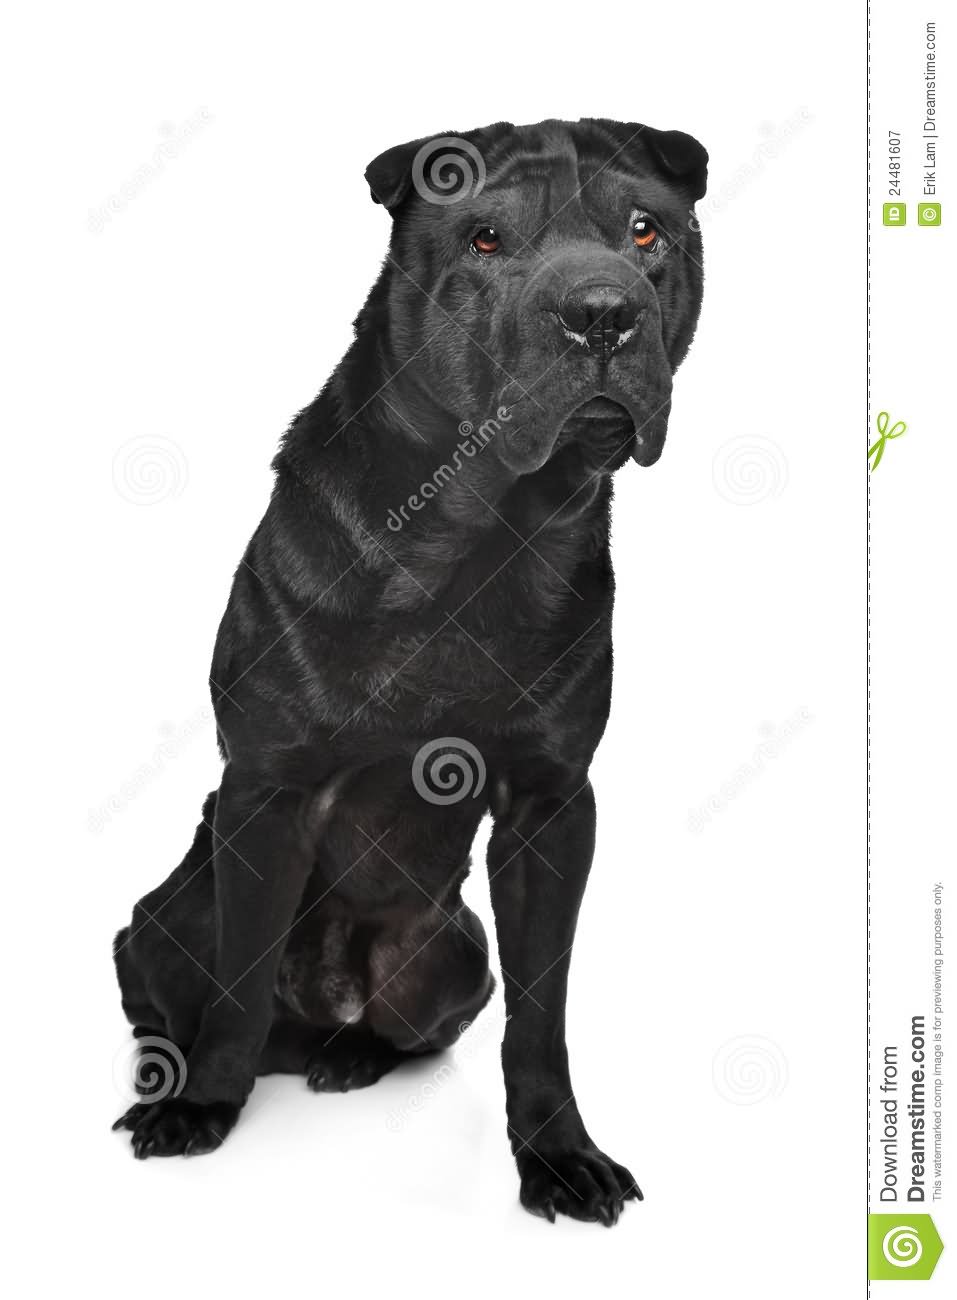 Black Male Shar Pei Dog Sitting